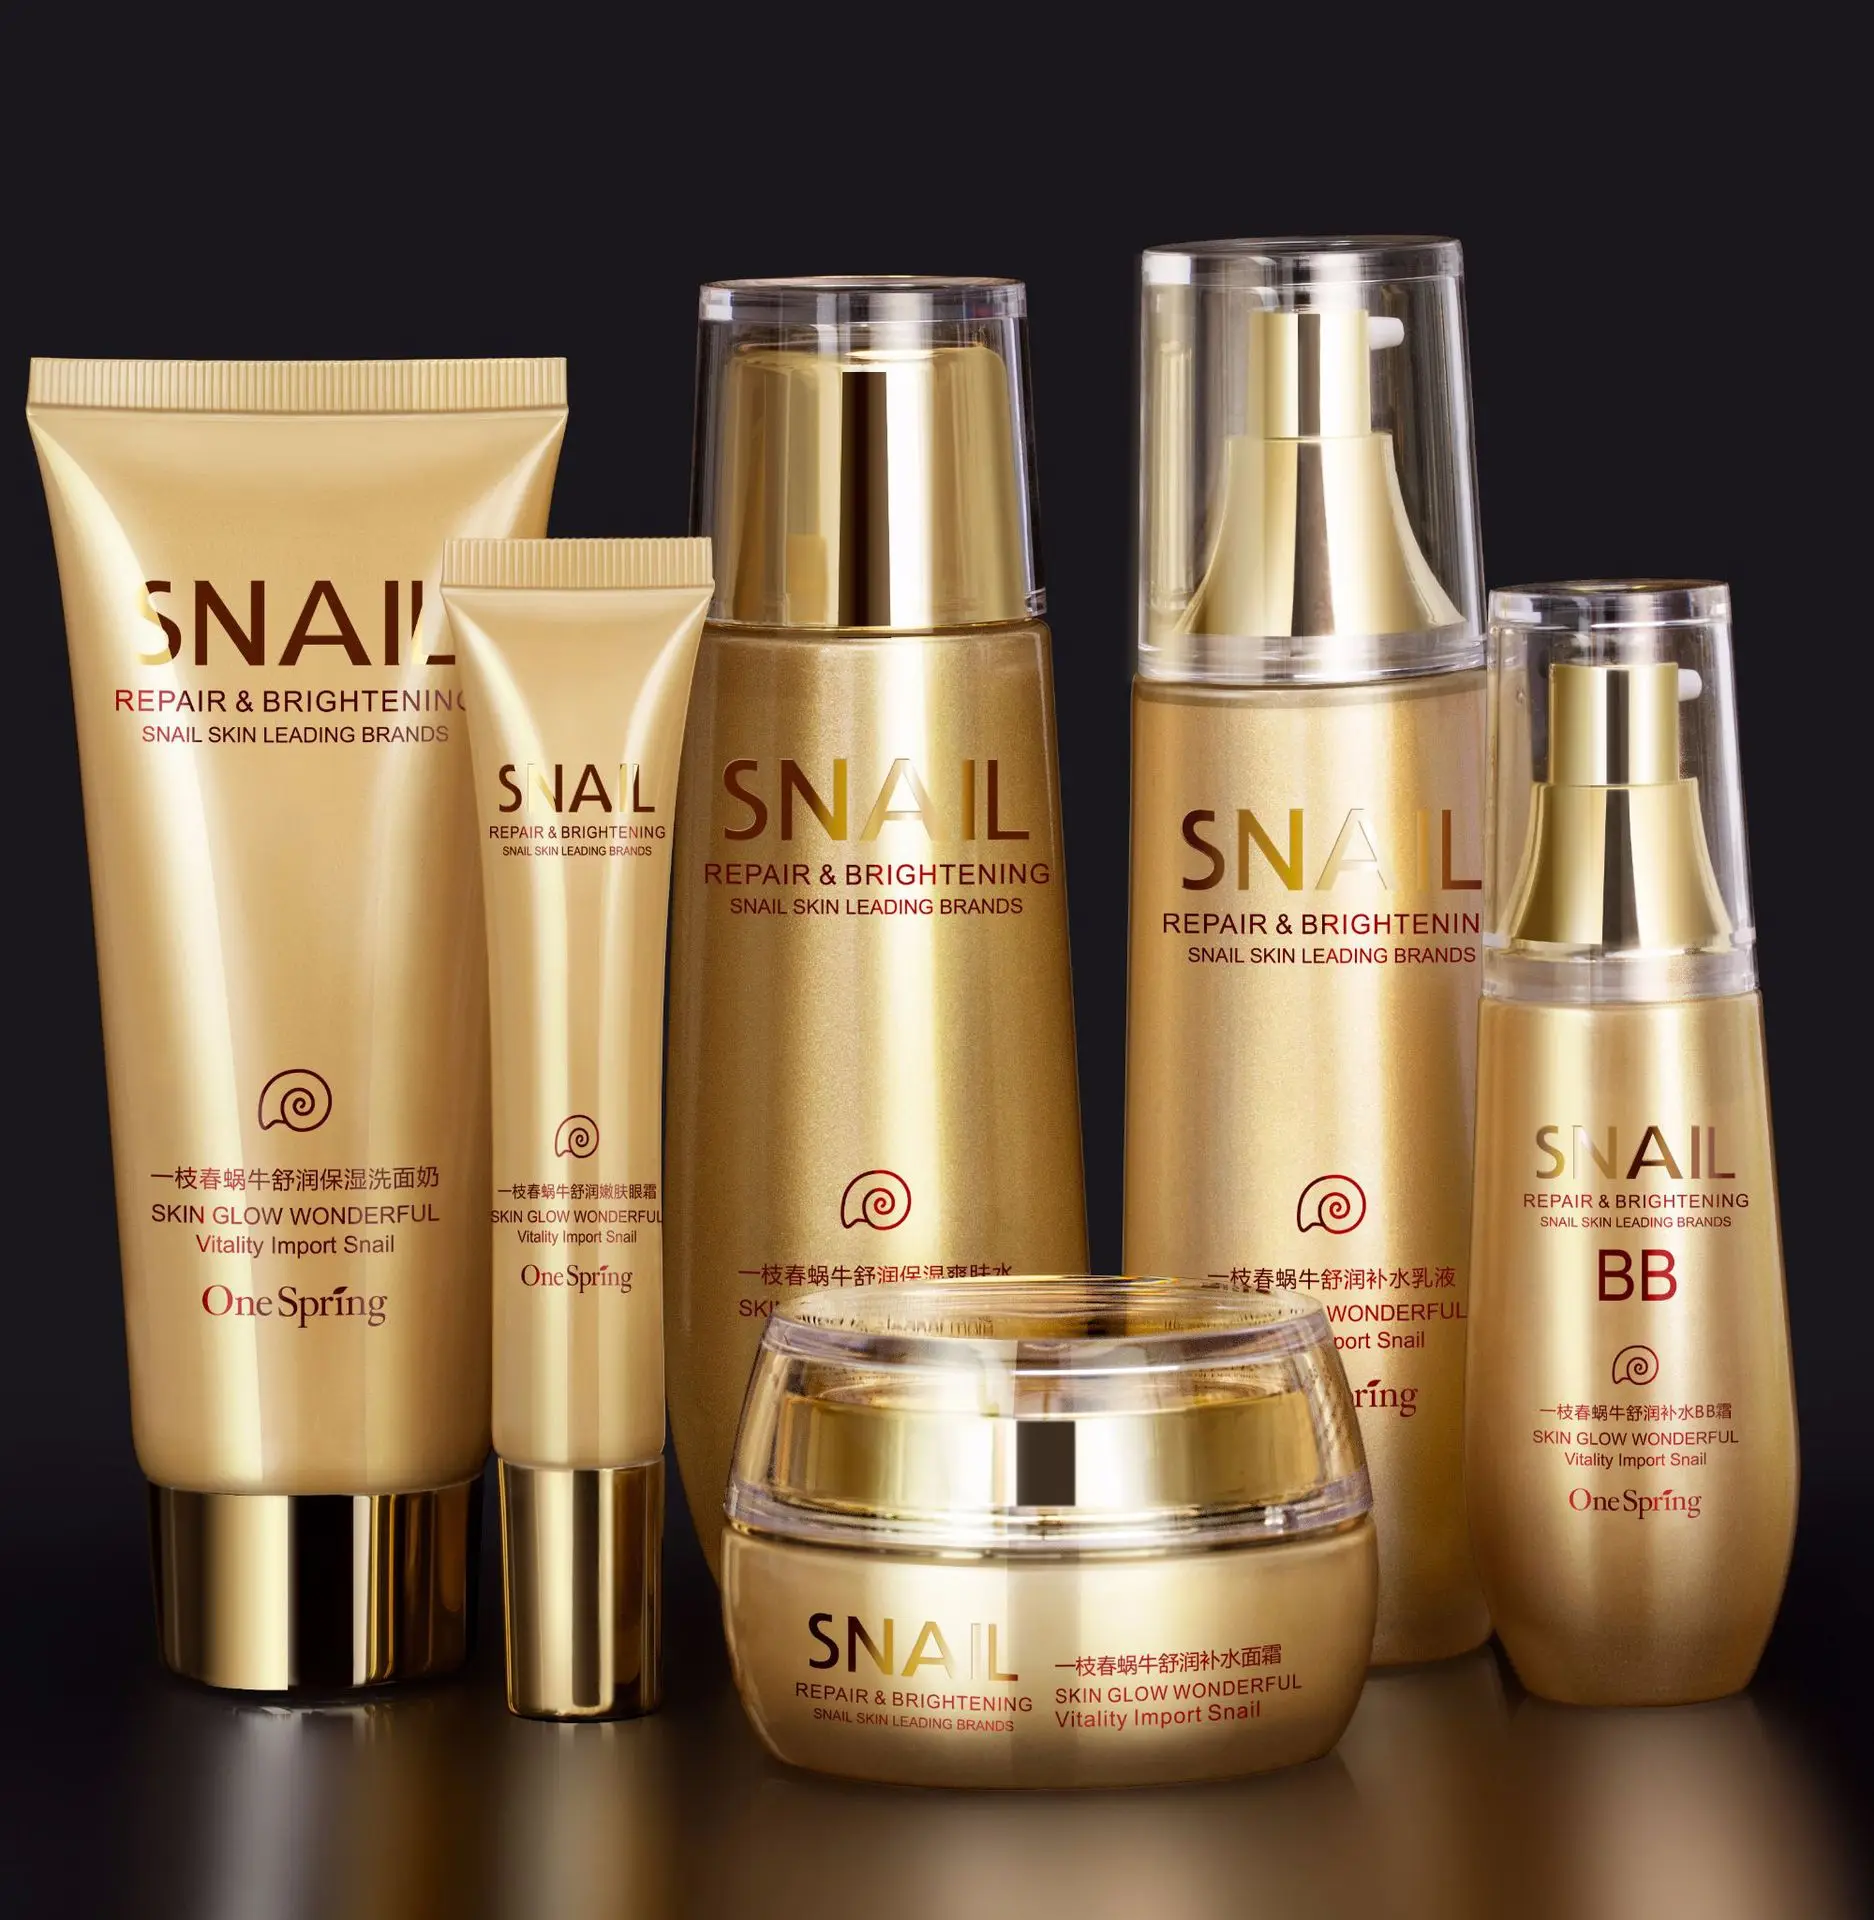 snail repair brightening 6in1 skincare kit moisturizing skin care set cosmetics facial beauty kit